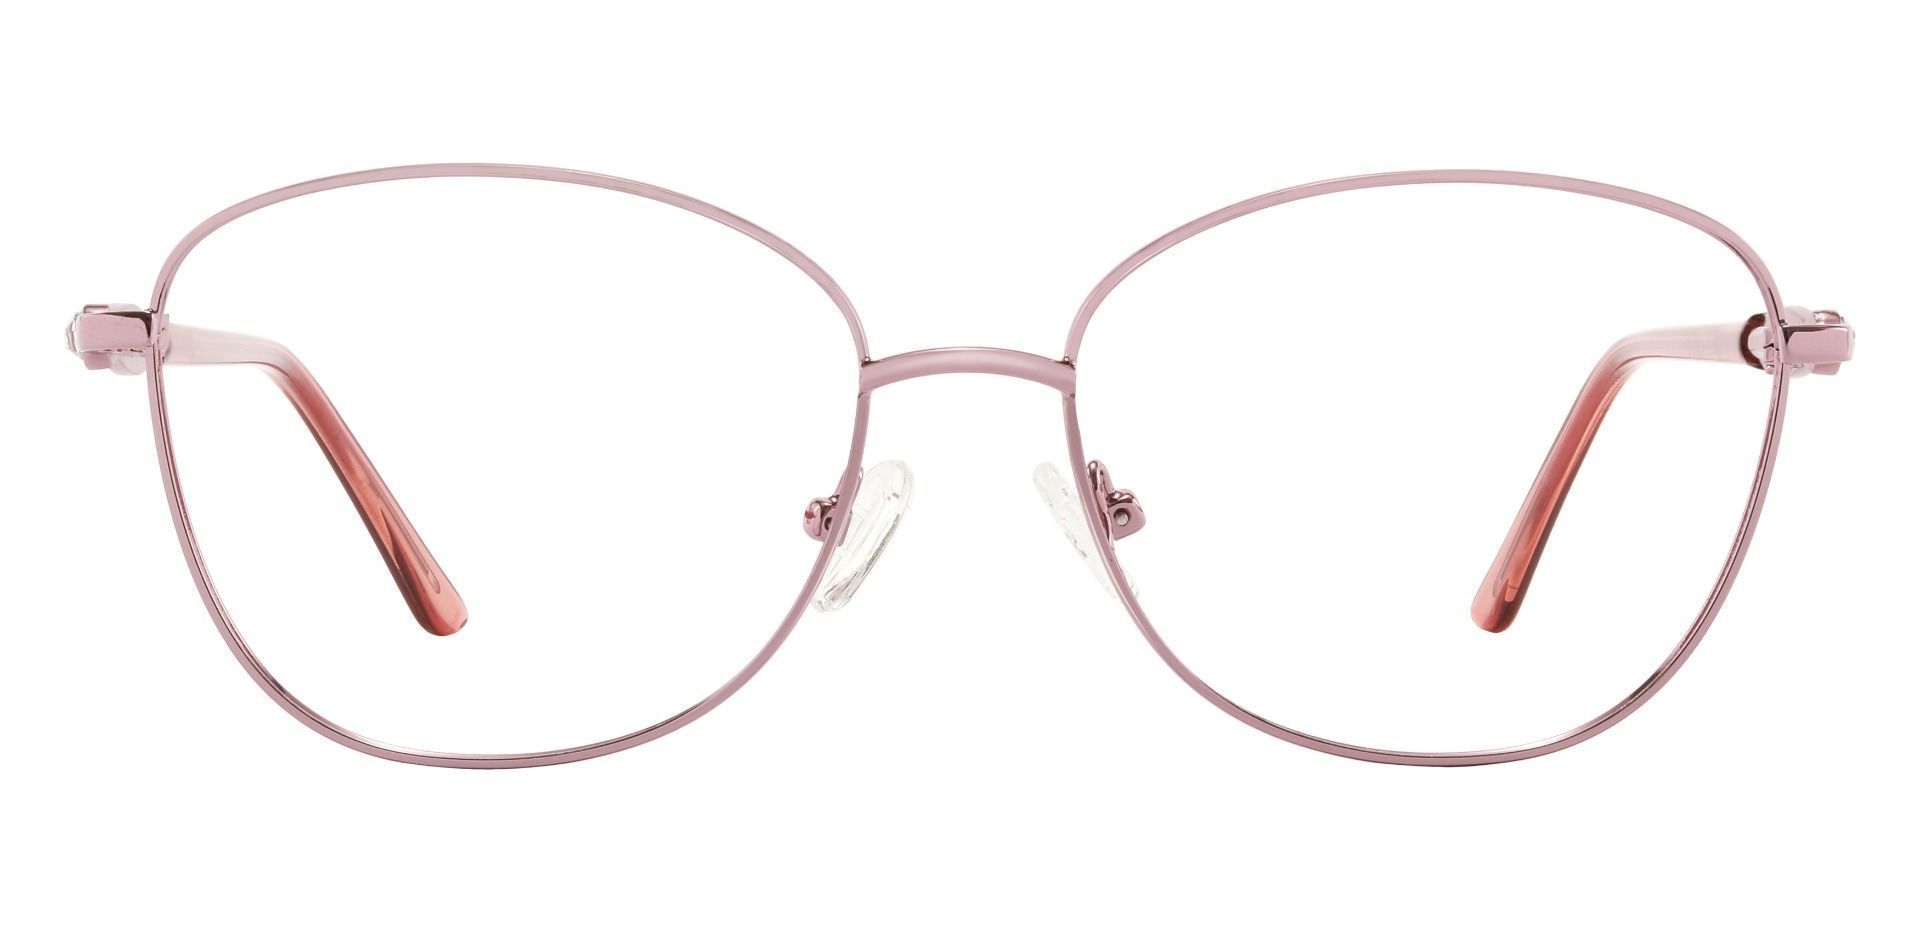 Almena Oval Progressive Glasses - Pink